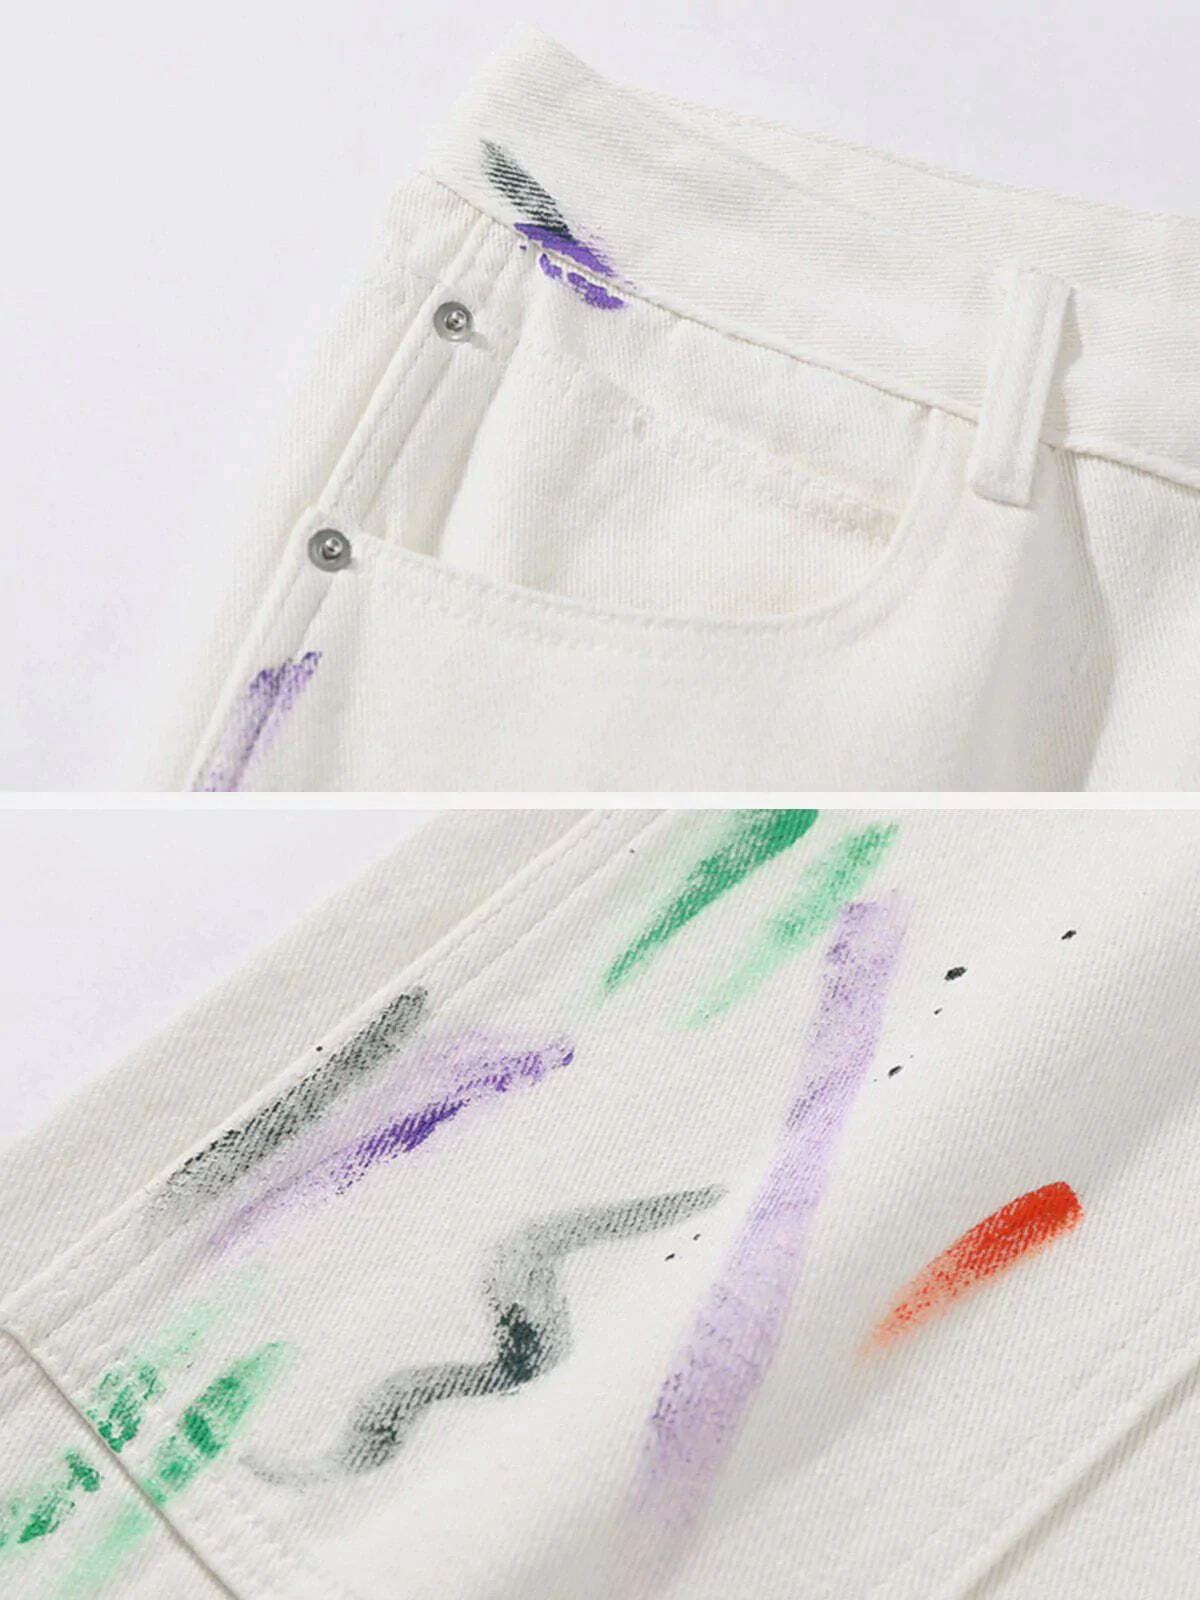 graffiti stitched jeans edgy & vibrant streetwear 4503